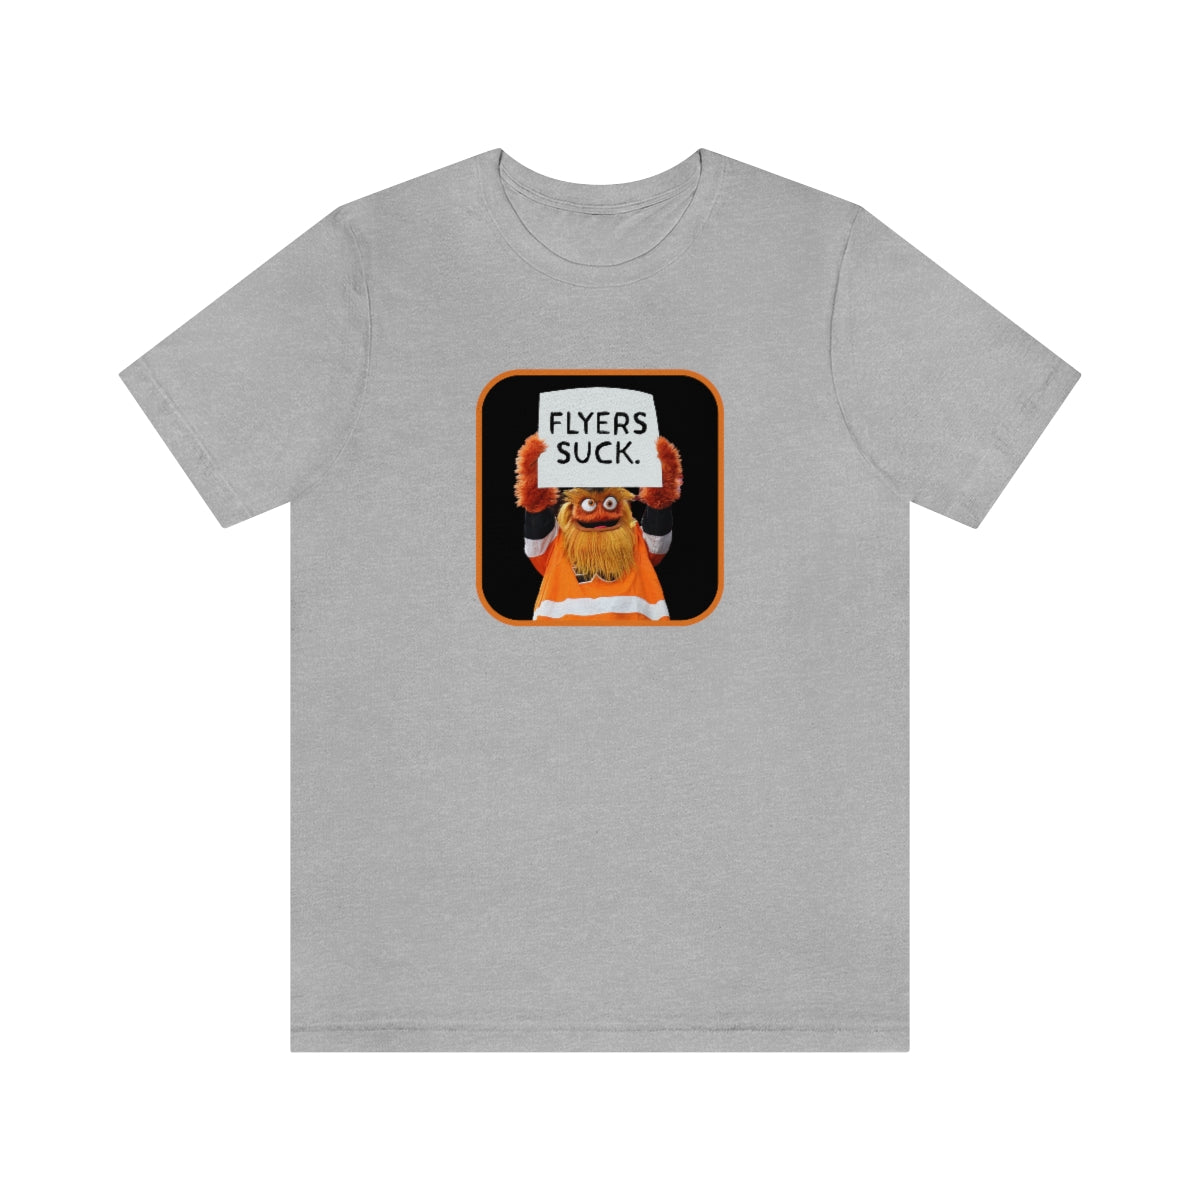 Philadelphia Flyers Gritty Merchandise, Flyers Gritty T-Shirts